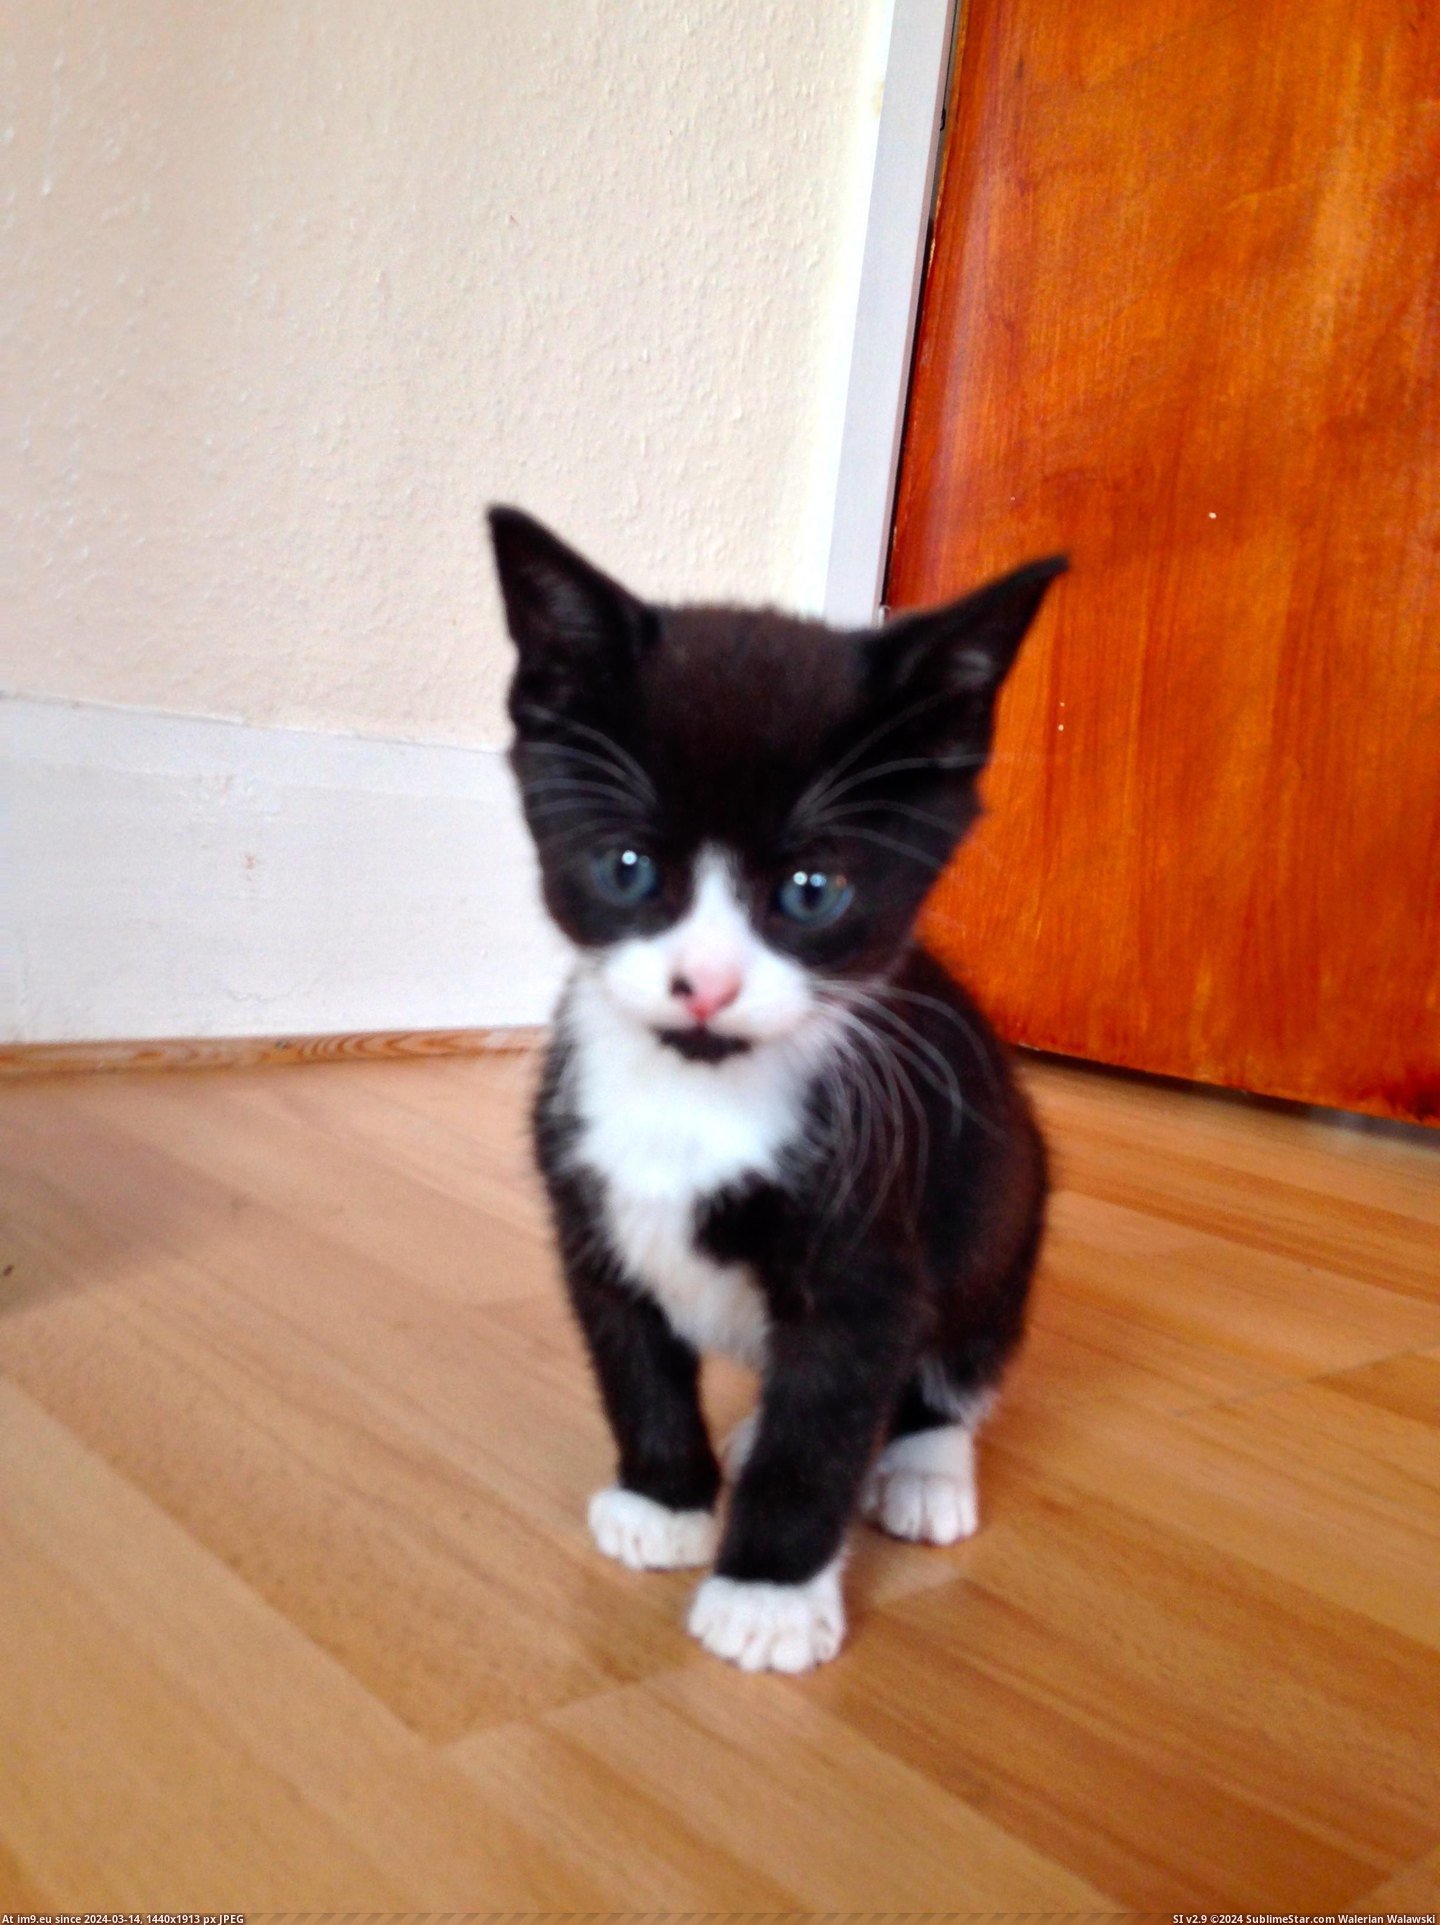 #Cats #Kitten #Miyagi #Vincenzo #Forgotten #Offspring [Cats] Vincenzo the kitten: Mr Miyagi's forgotten offspring Pic. (Bild von album My r/CATS favs))